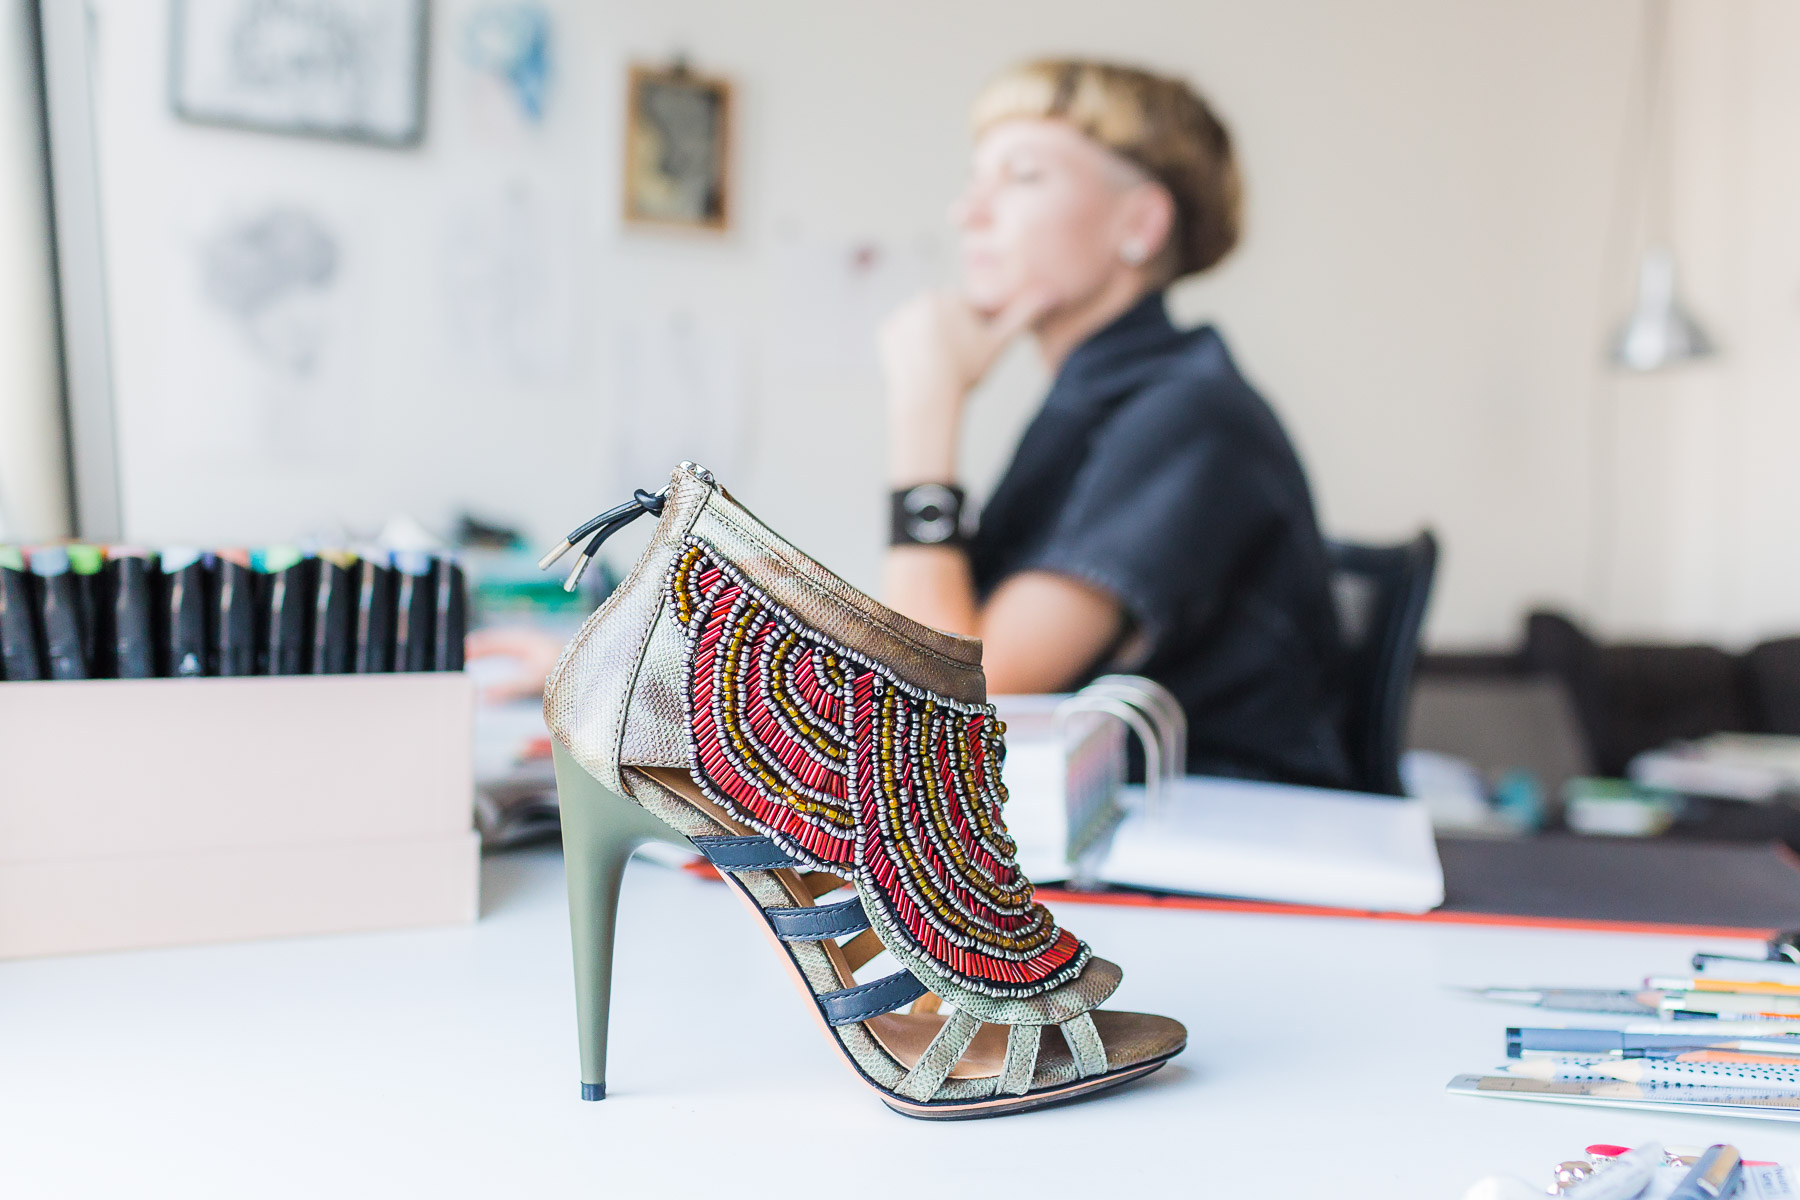 fashion-shoe-designer-LAMB-gwen-Stefani-collection-17.jpg